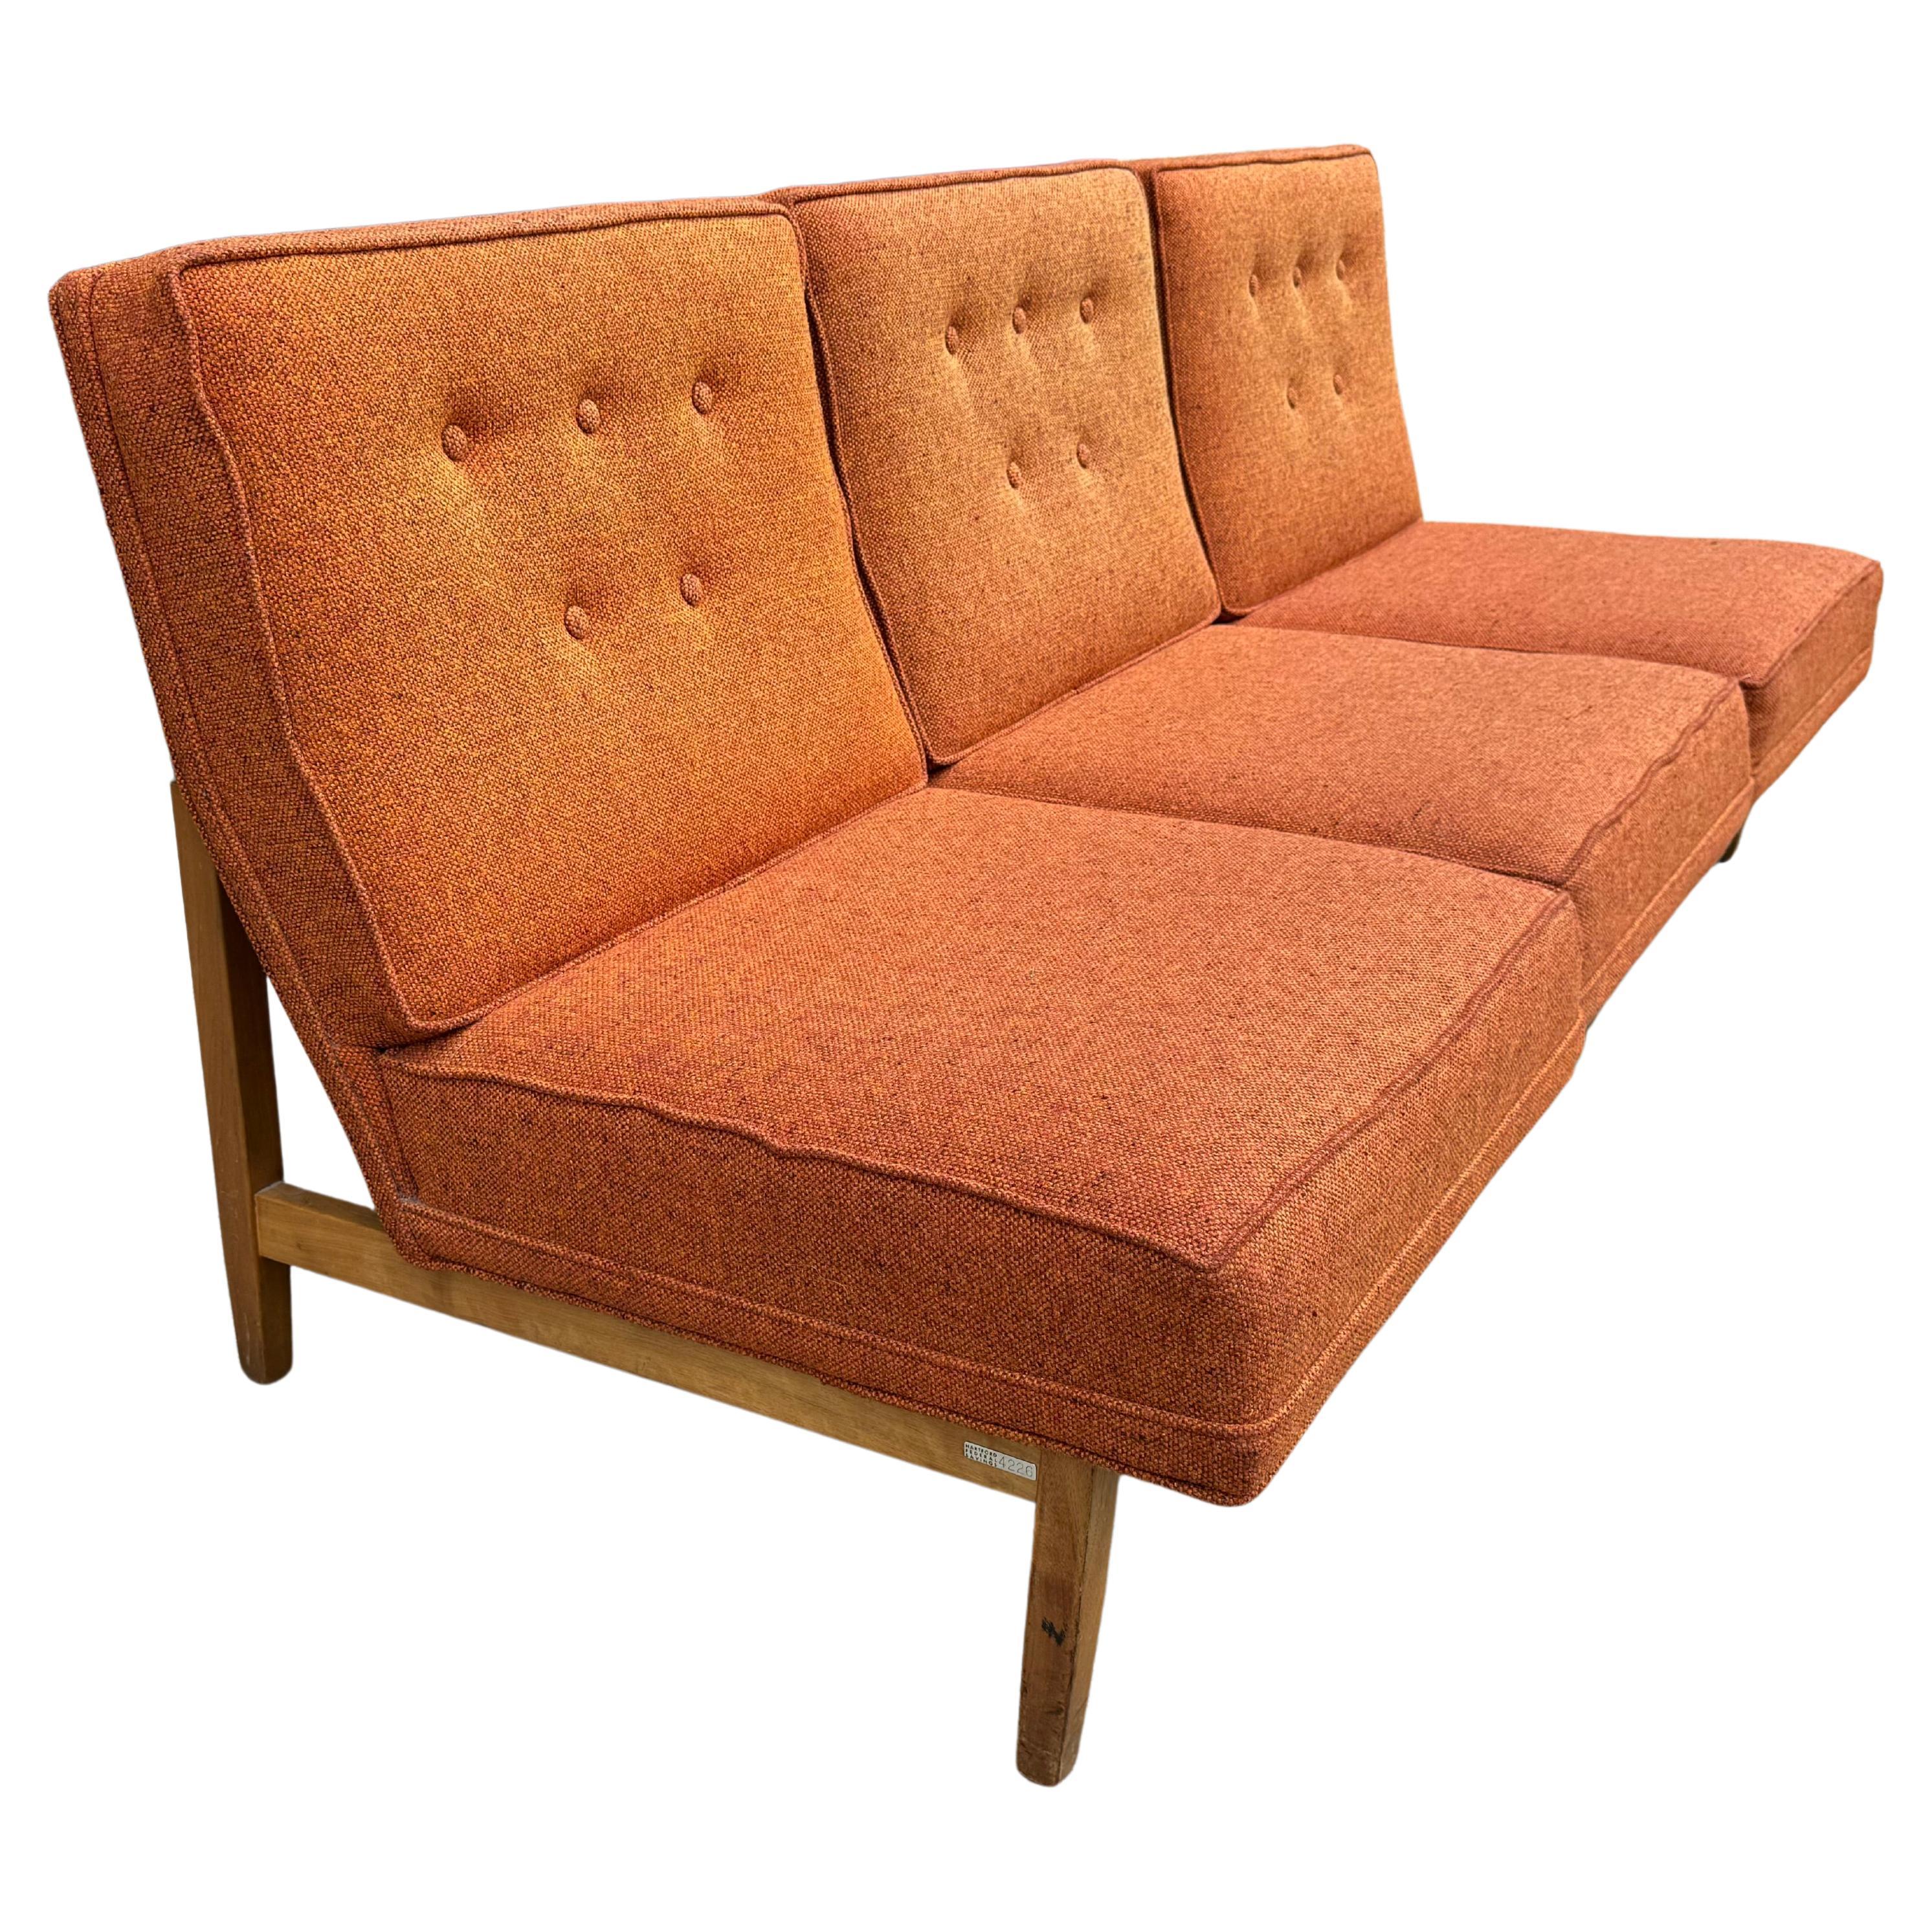 Set 3 Florence Knoll Slipper Chairs (3-seat sofa) . Classic Mid Century Modern